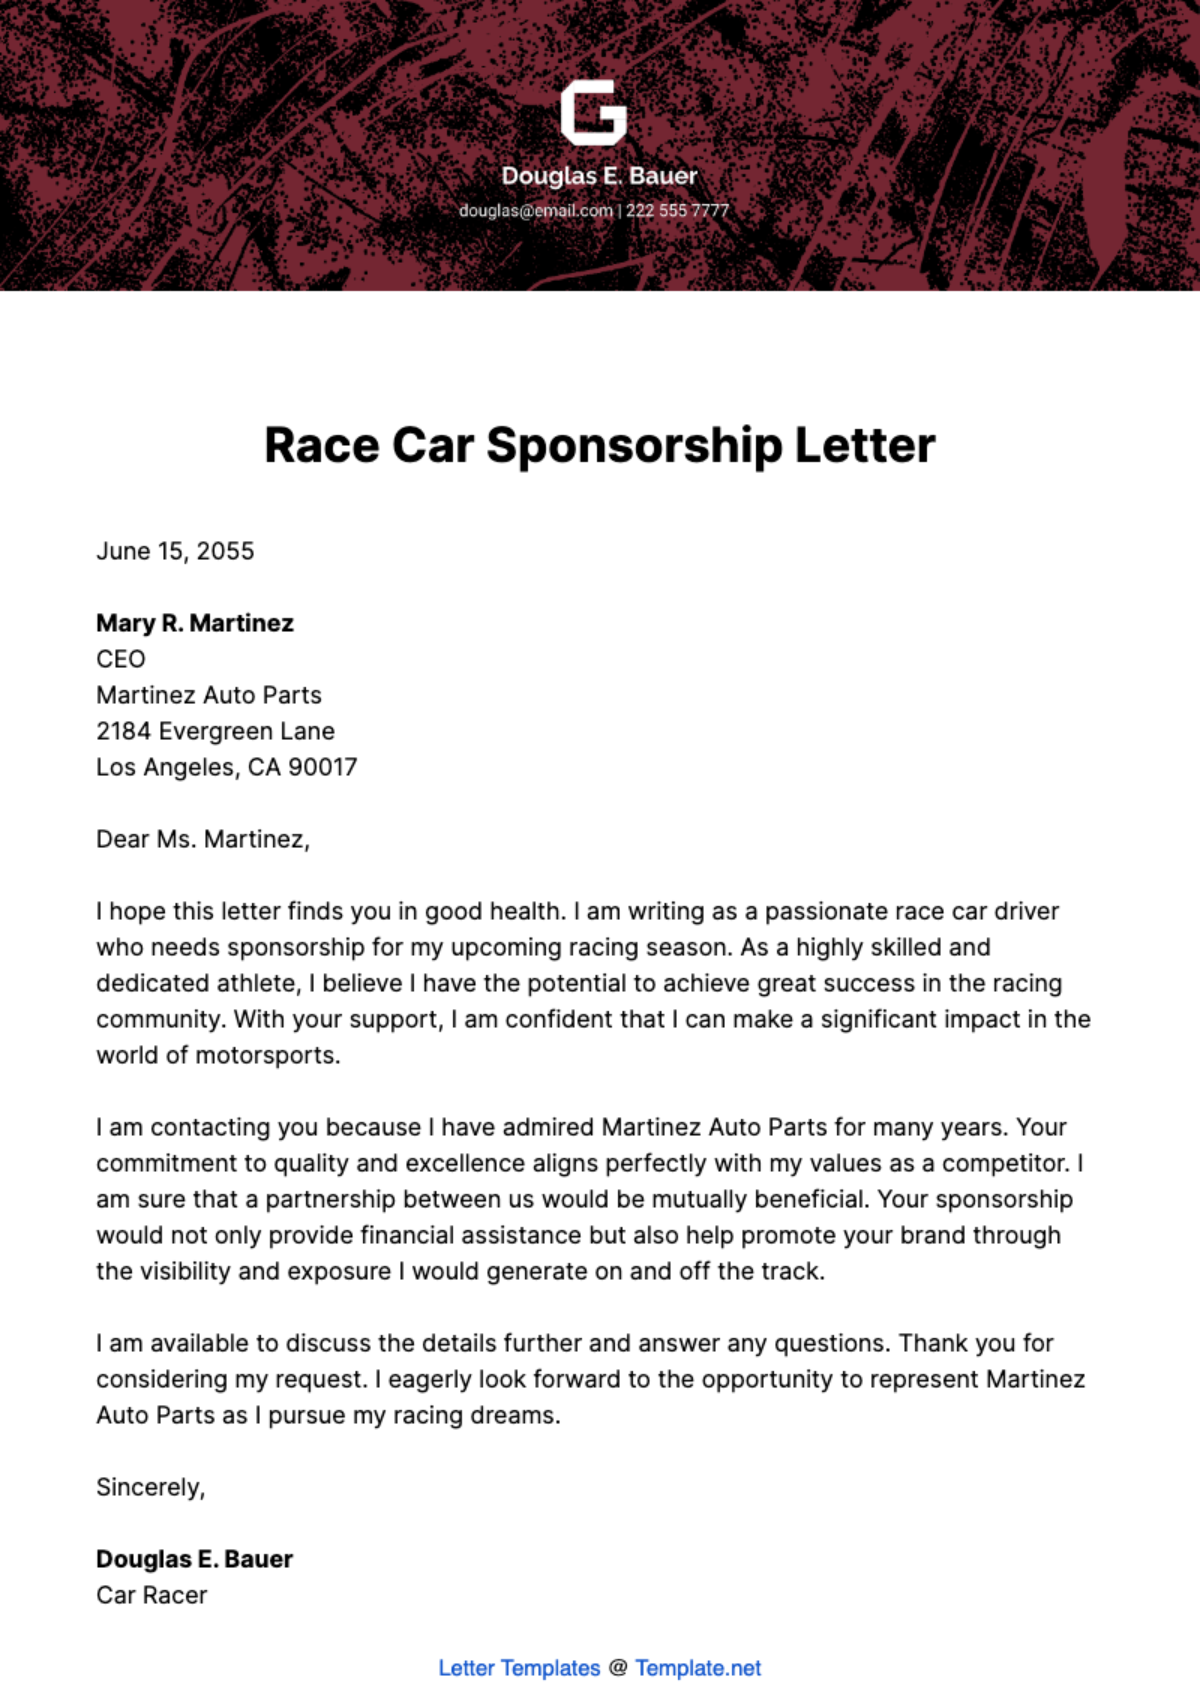 Race Car Sponsorship Letter Template